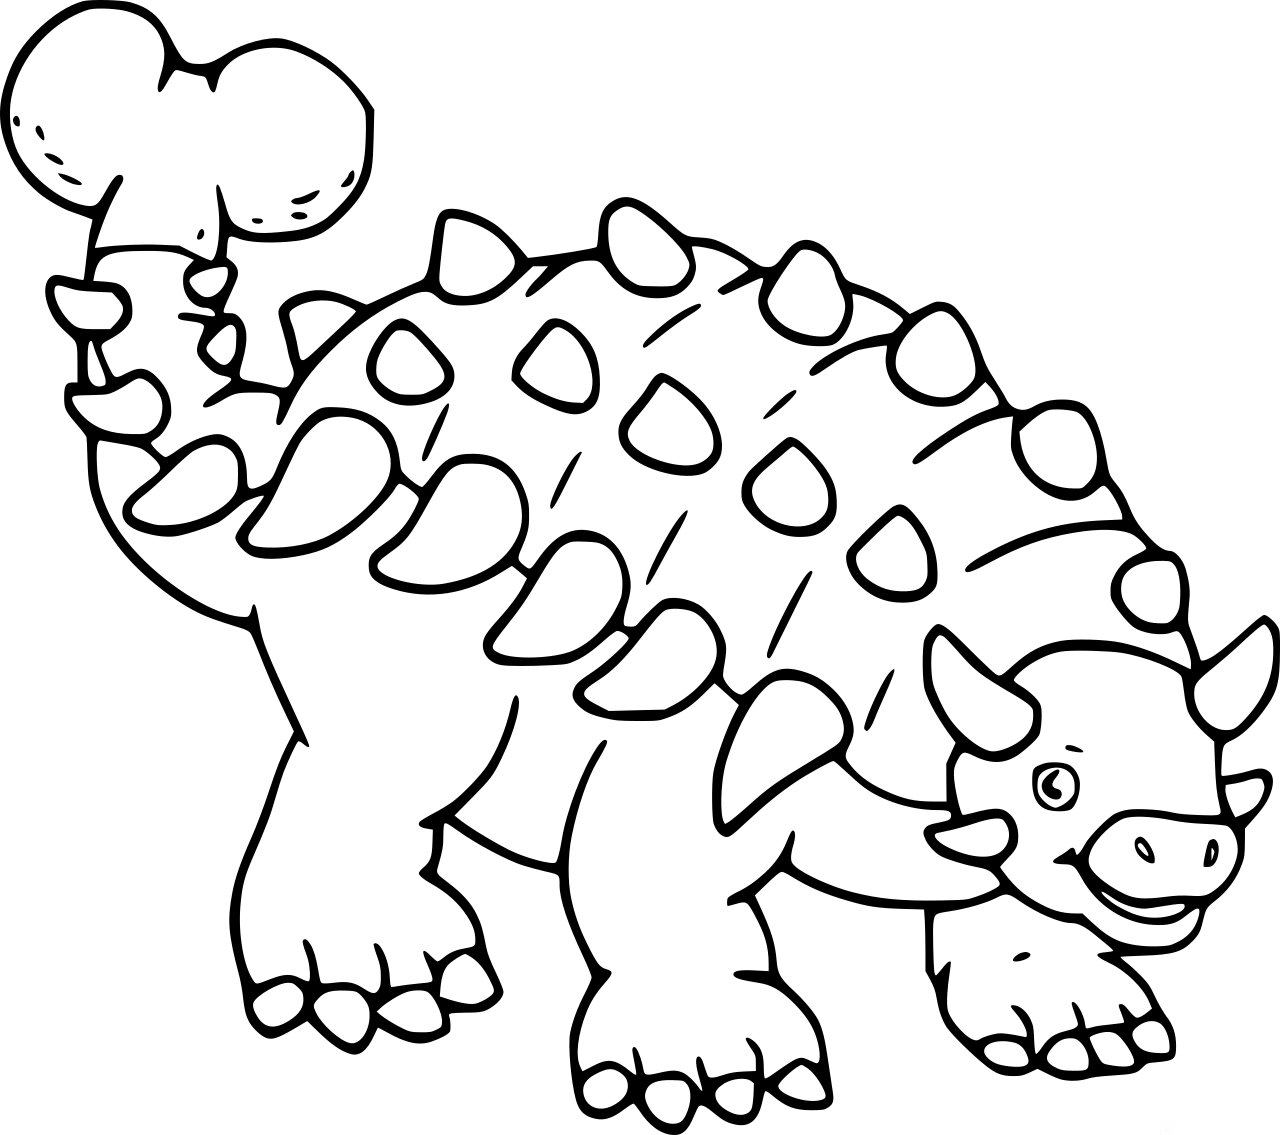 Very Easy Ankylosaurid Dinosaur Coloring Page